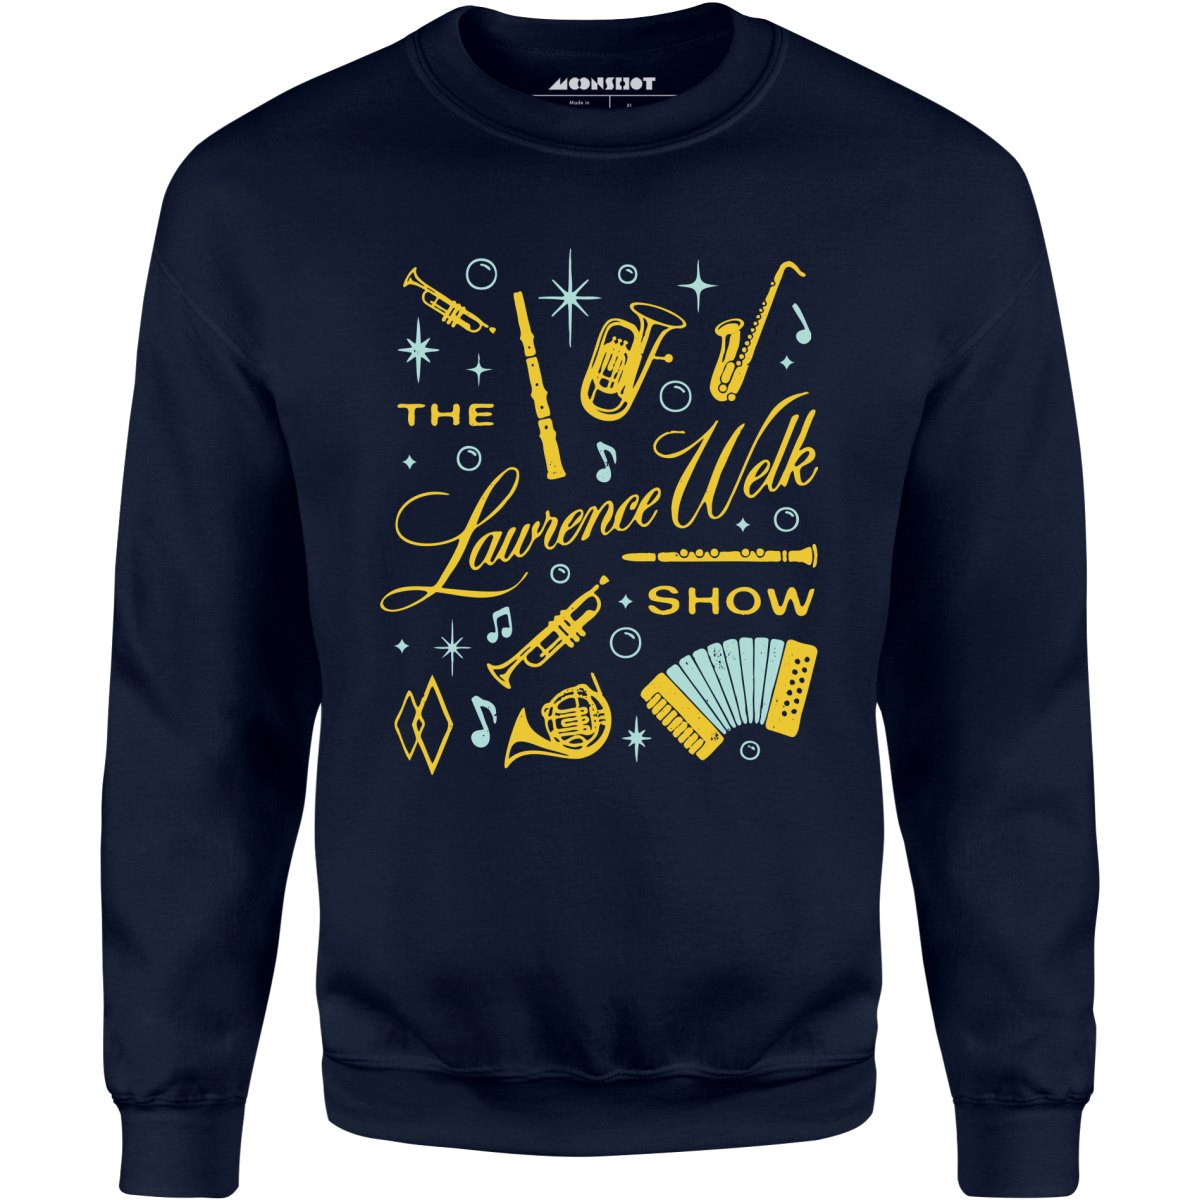 The Lawrence Welk Show - Unisex Sweatshirt